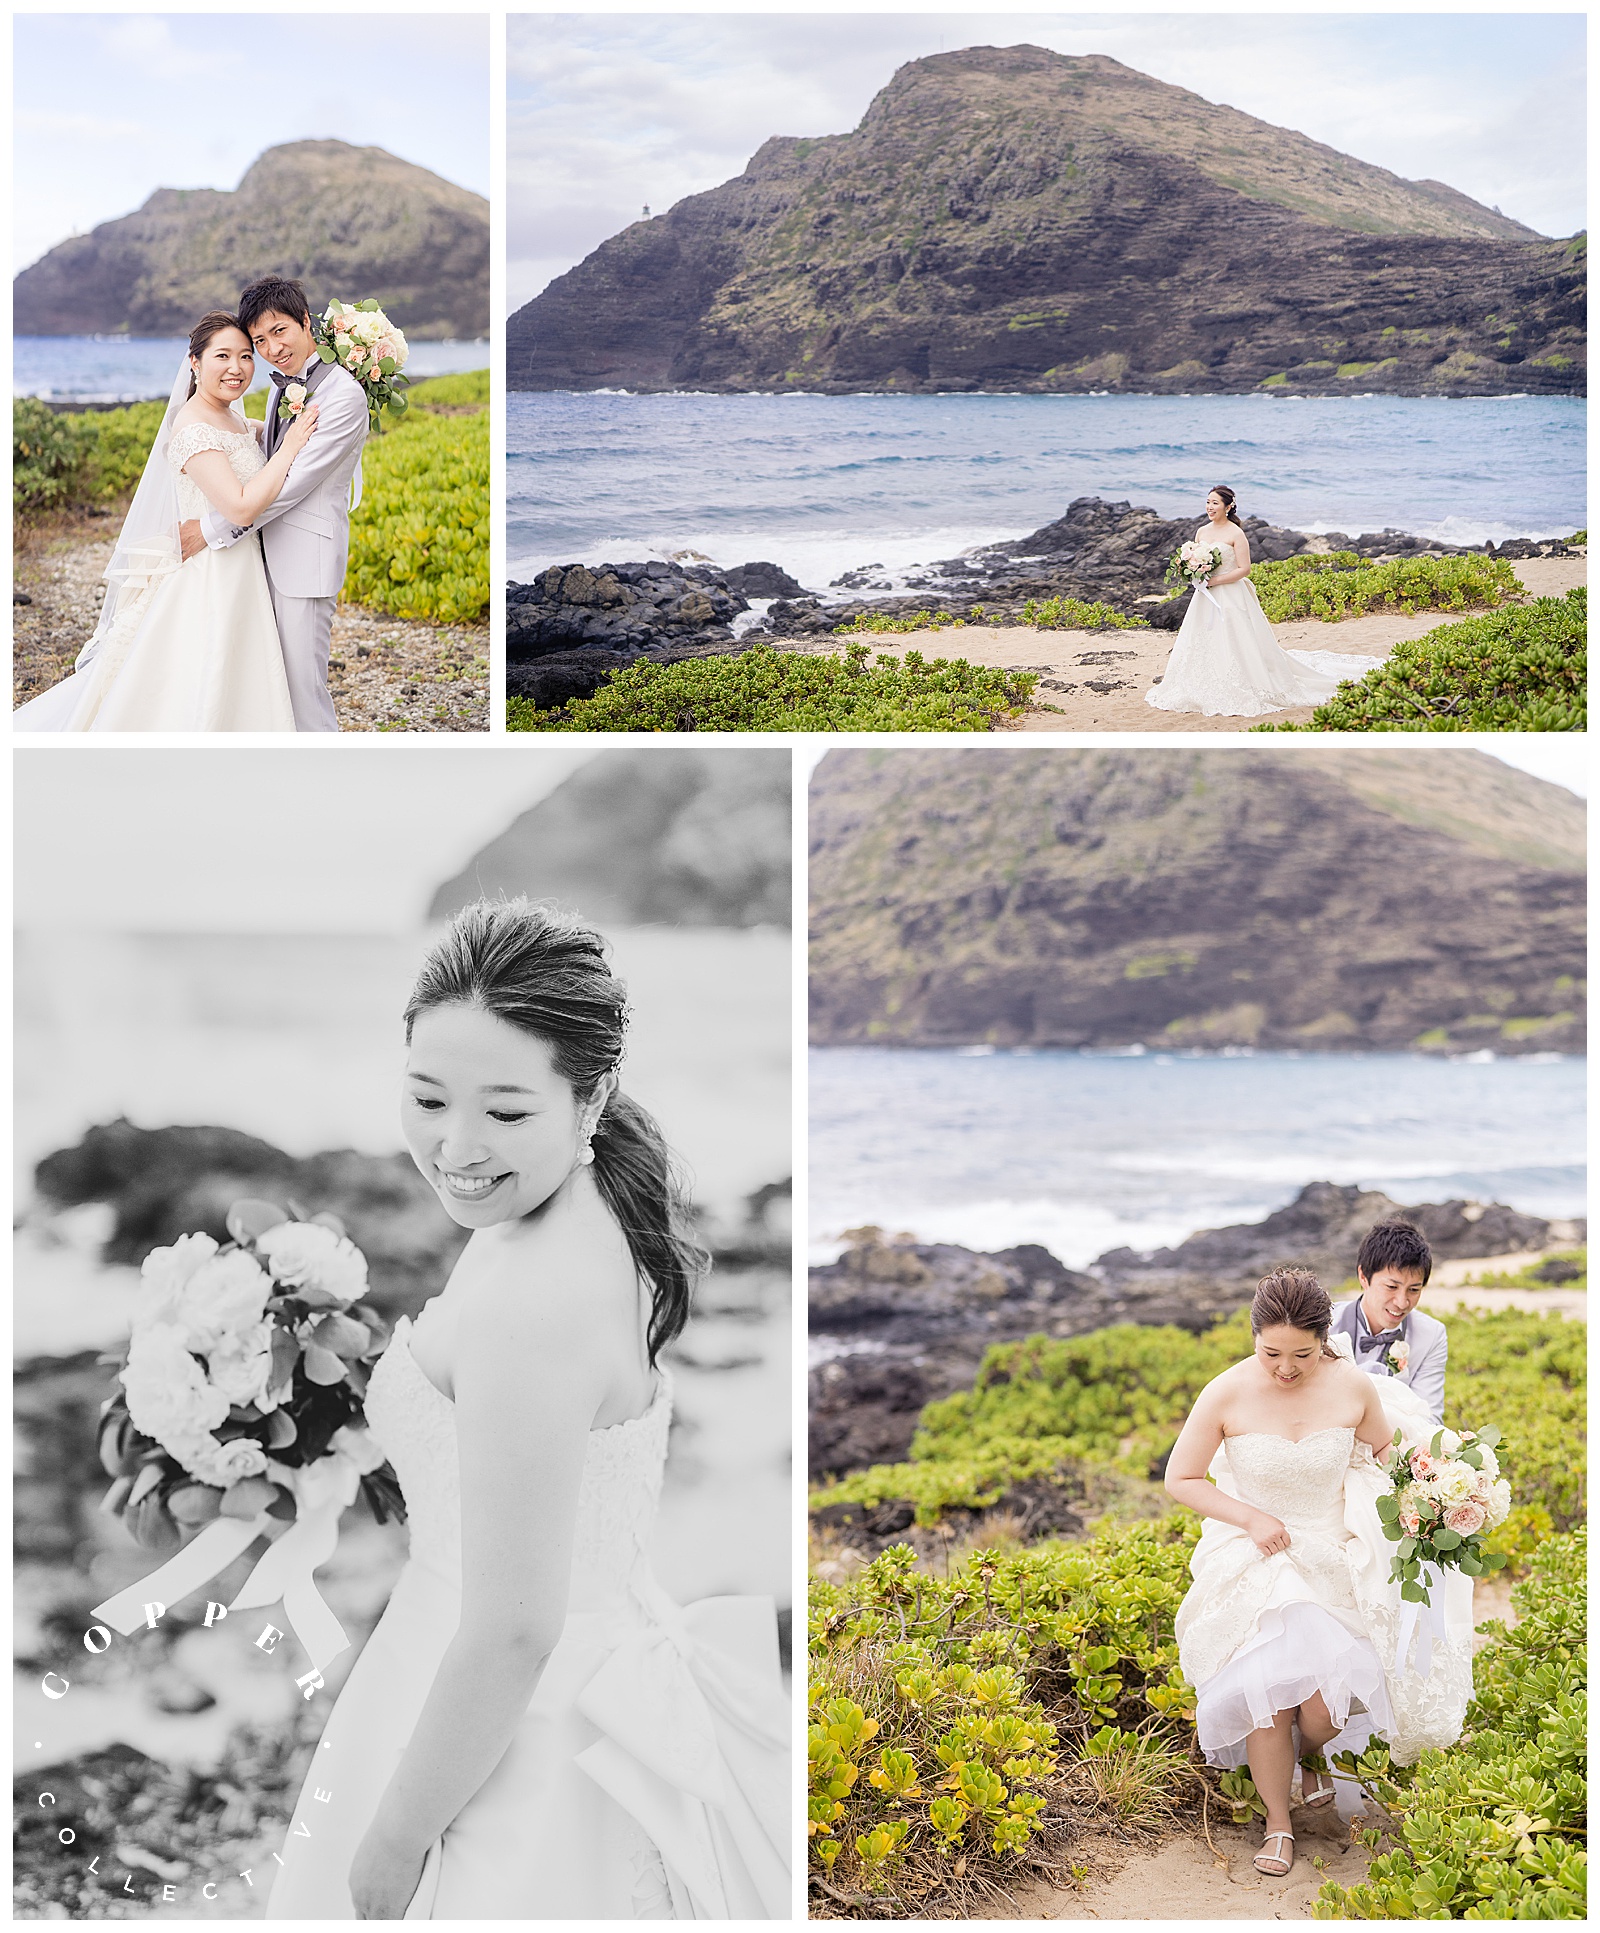 Japanese wedding ceremony on Oahu beach